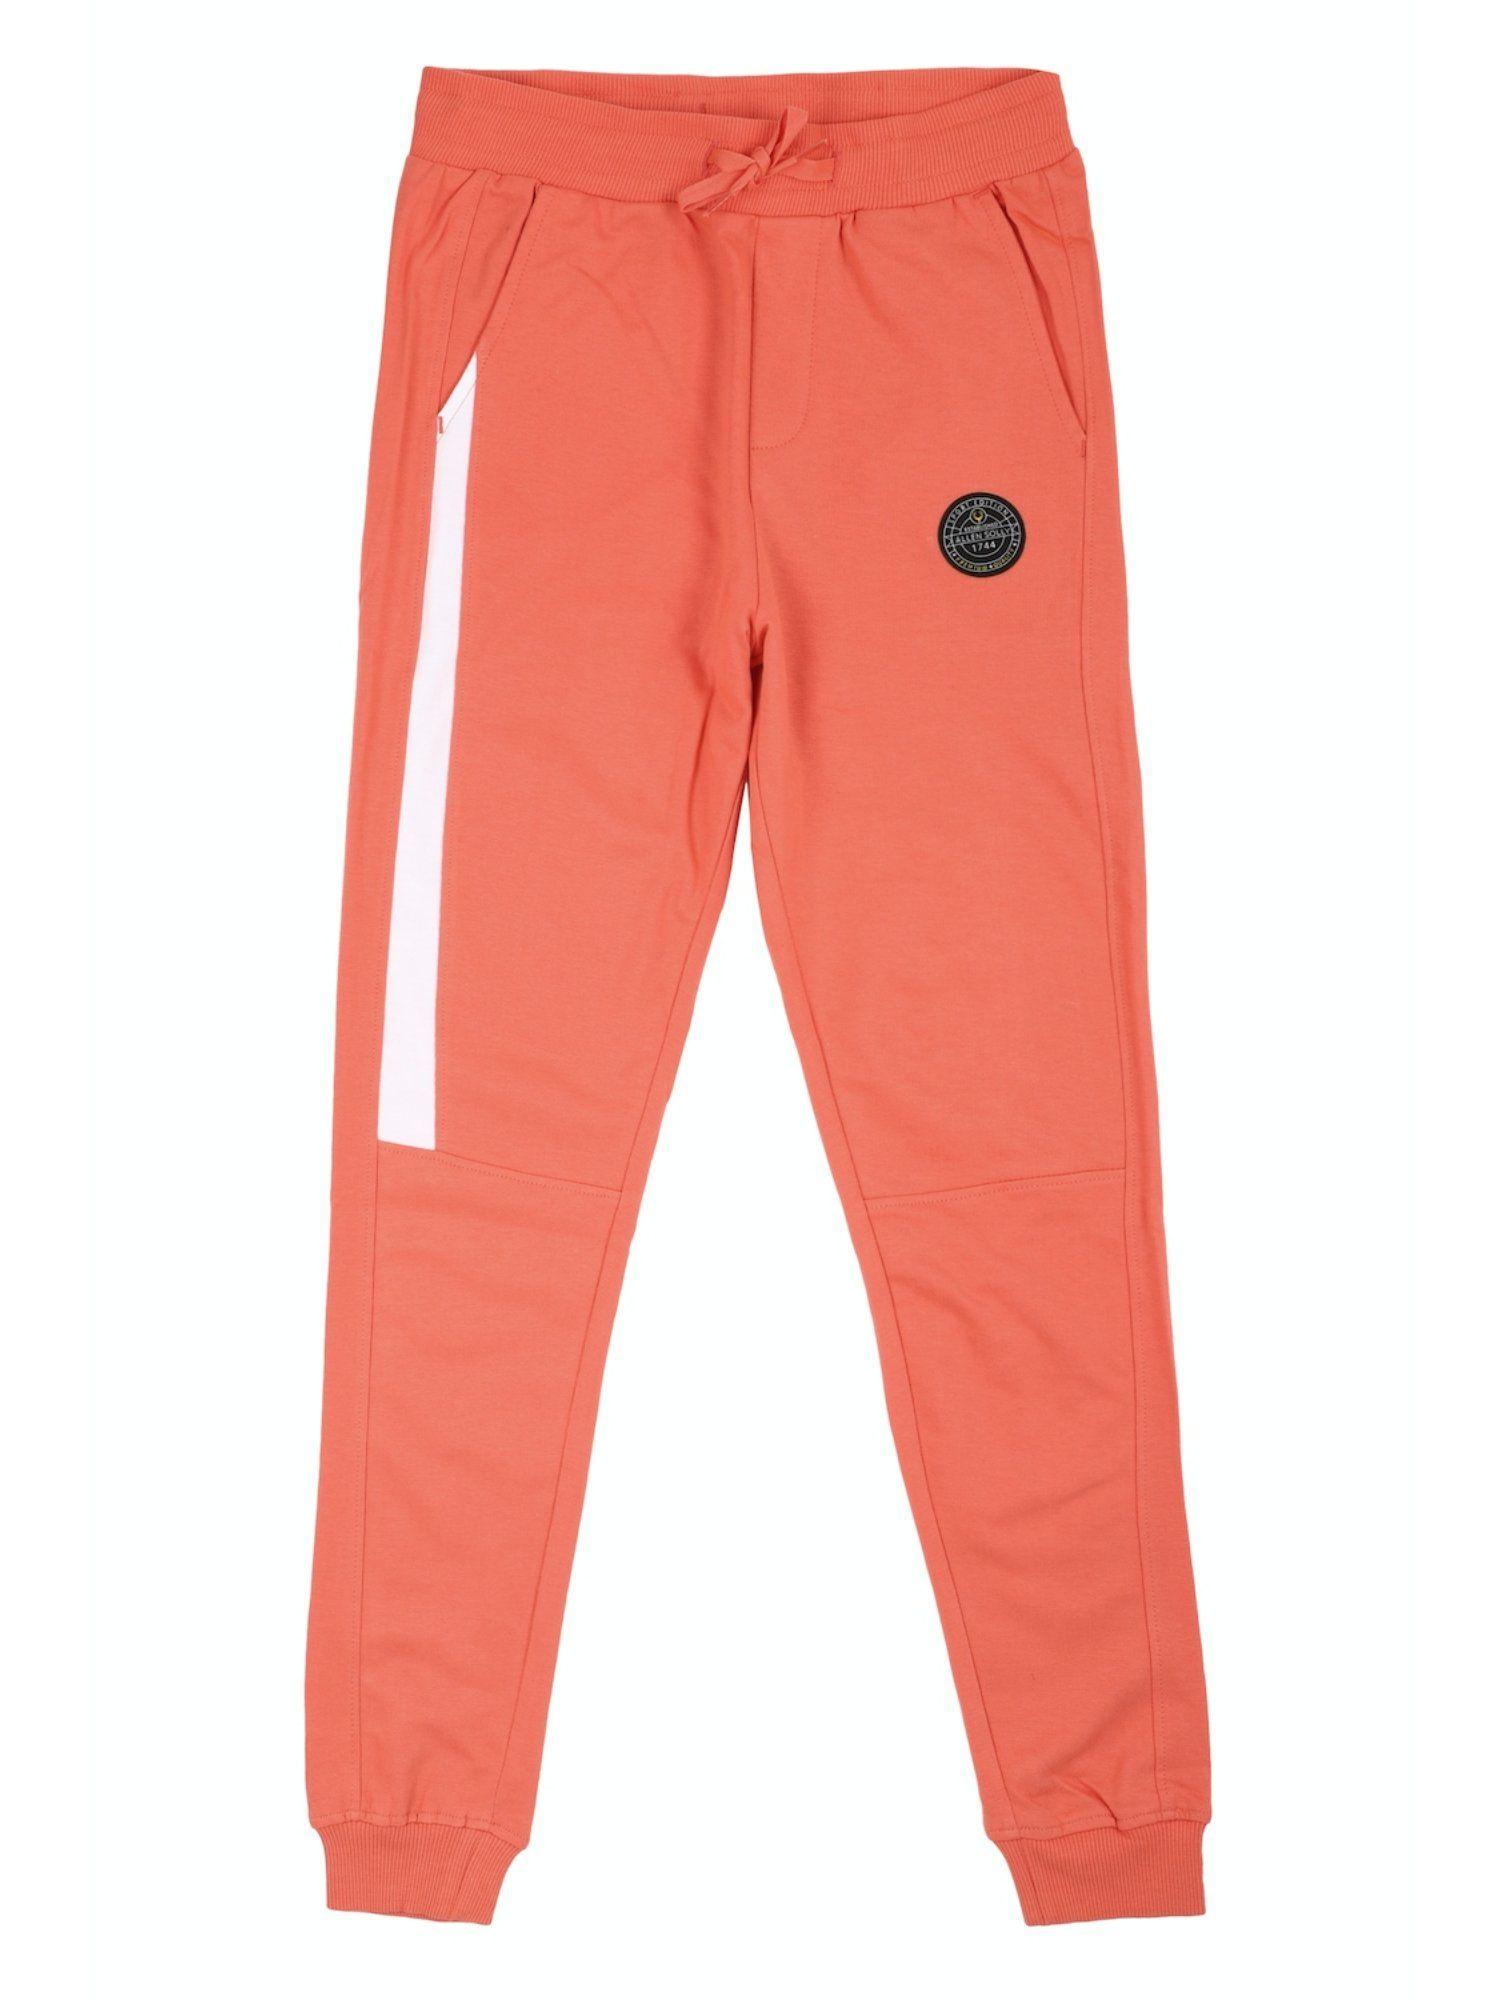 boys peach regular fit patterned jogger pants